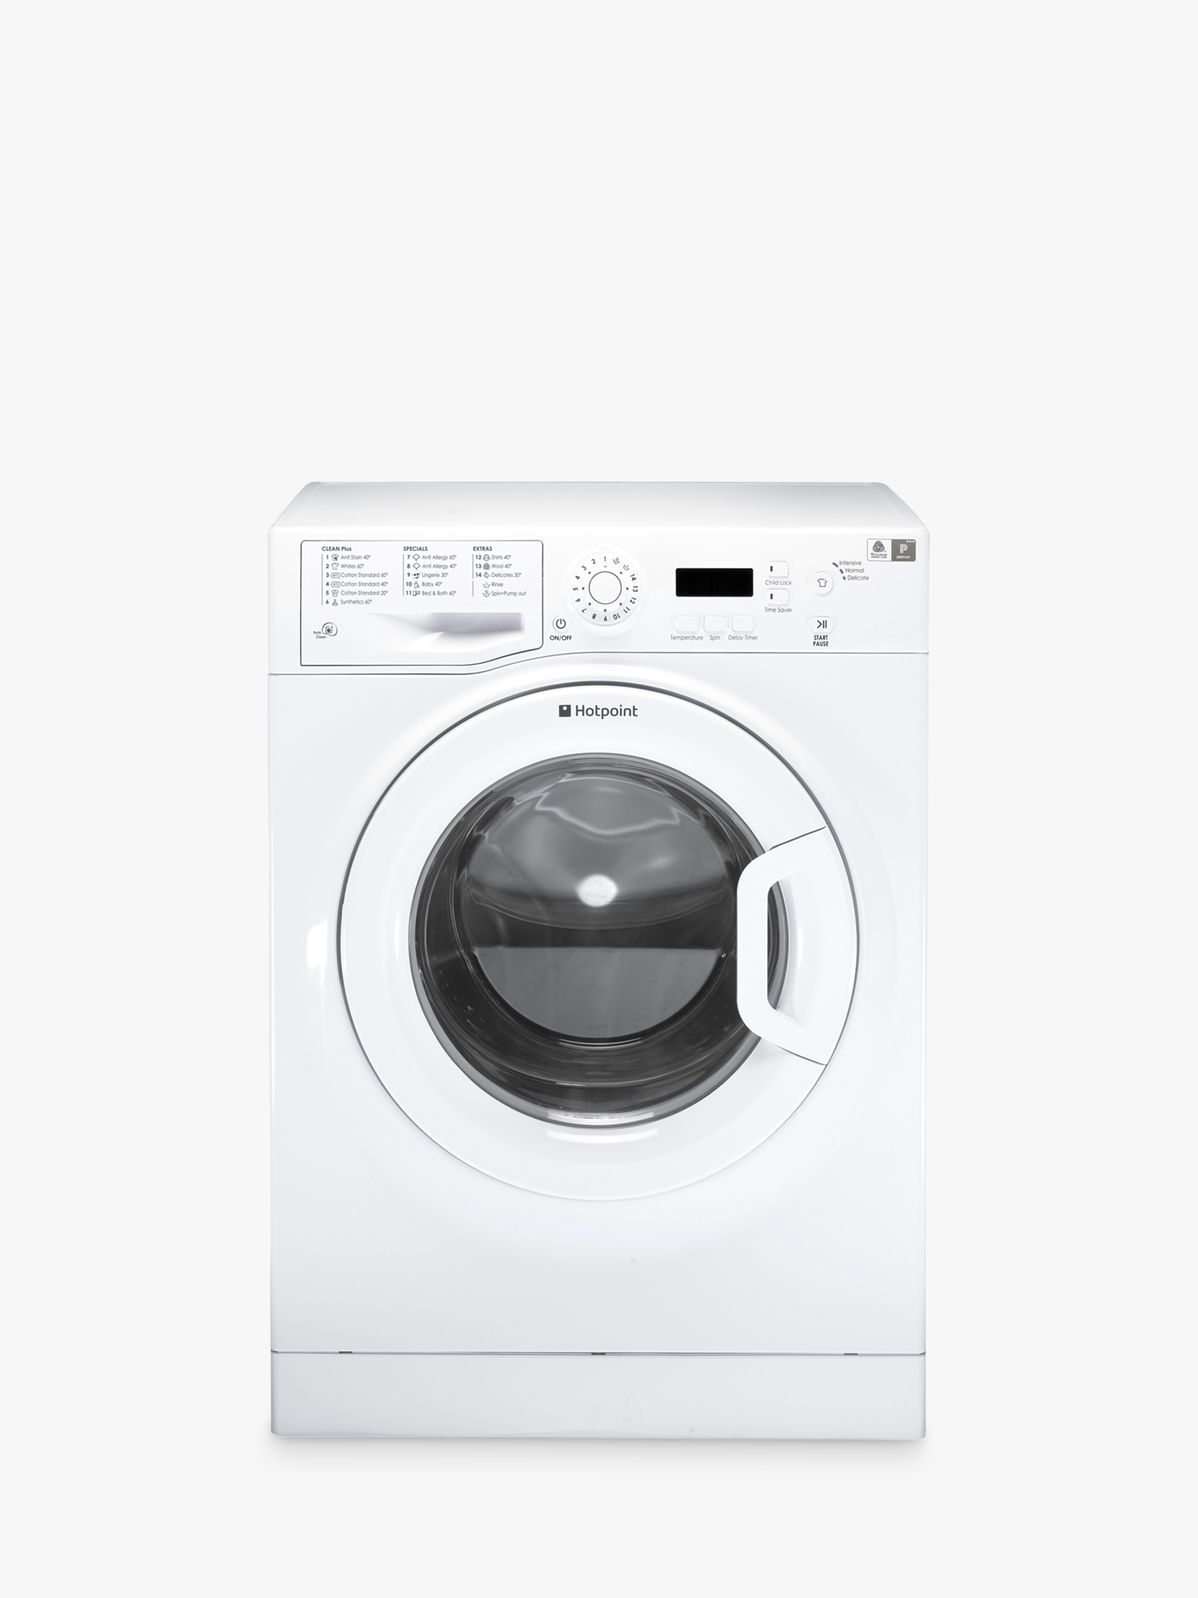 Hotpoint Aquarius WMAQF721P Washing Machine, White